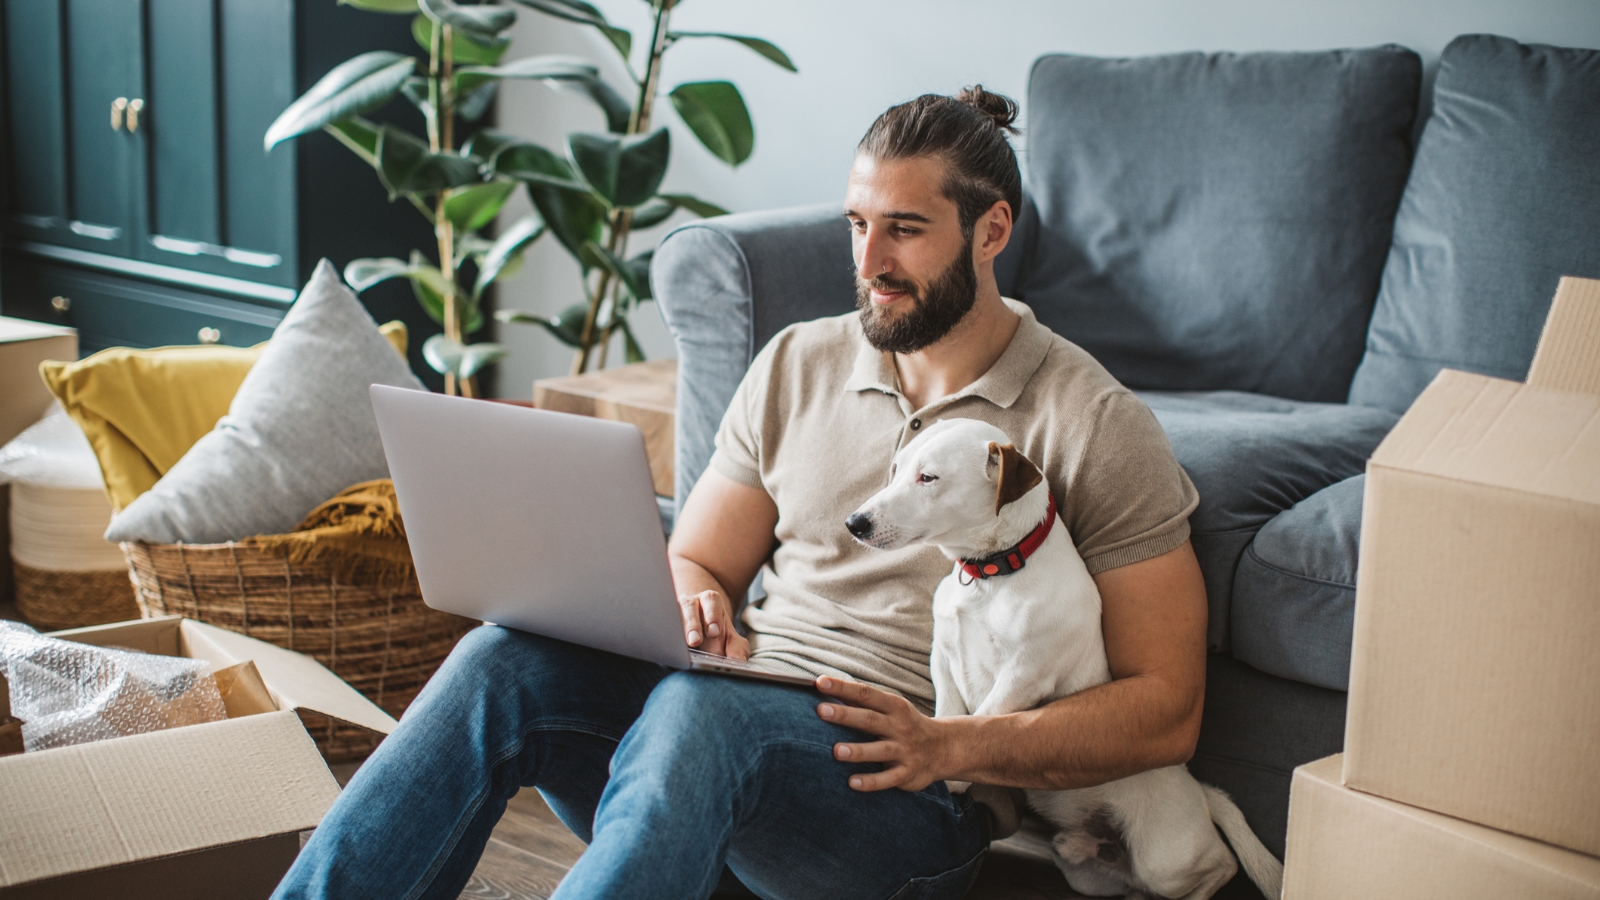 Guy on laptop with dog. 